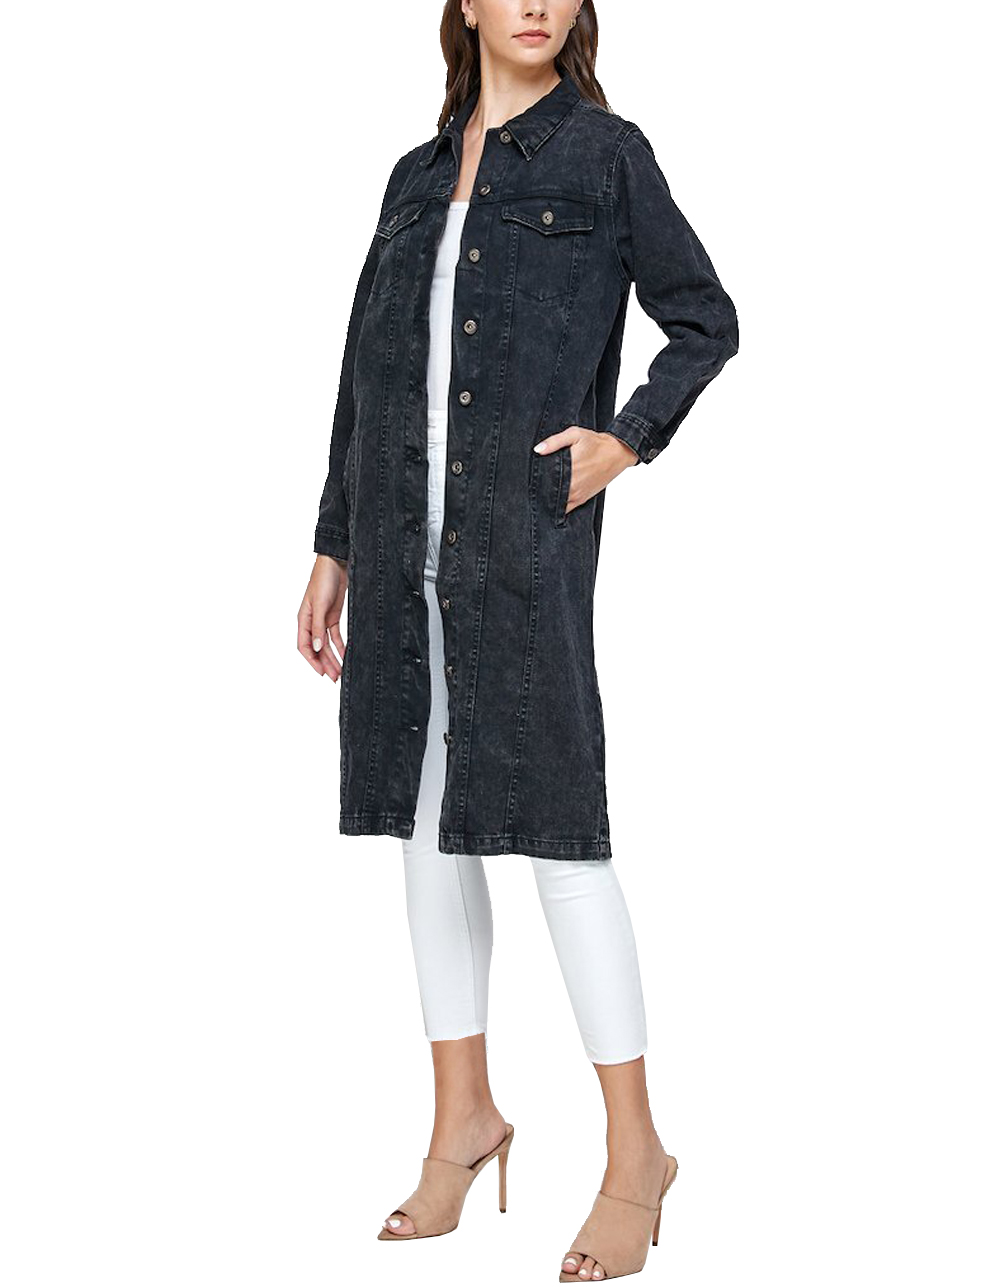 Women's Long Casual Maxi Length Denim Cotton Coat Oversize Button Up Jean Jacket (Mineral Black, S) - image 3 of 6